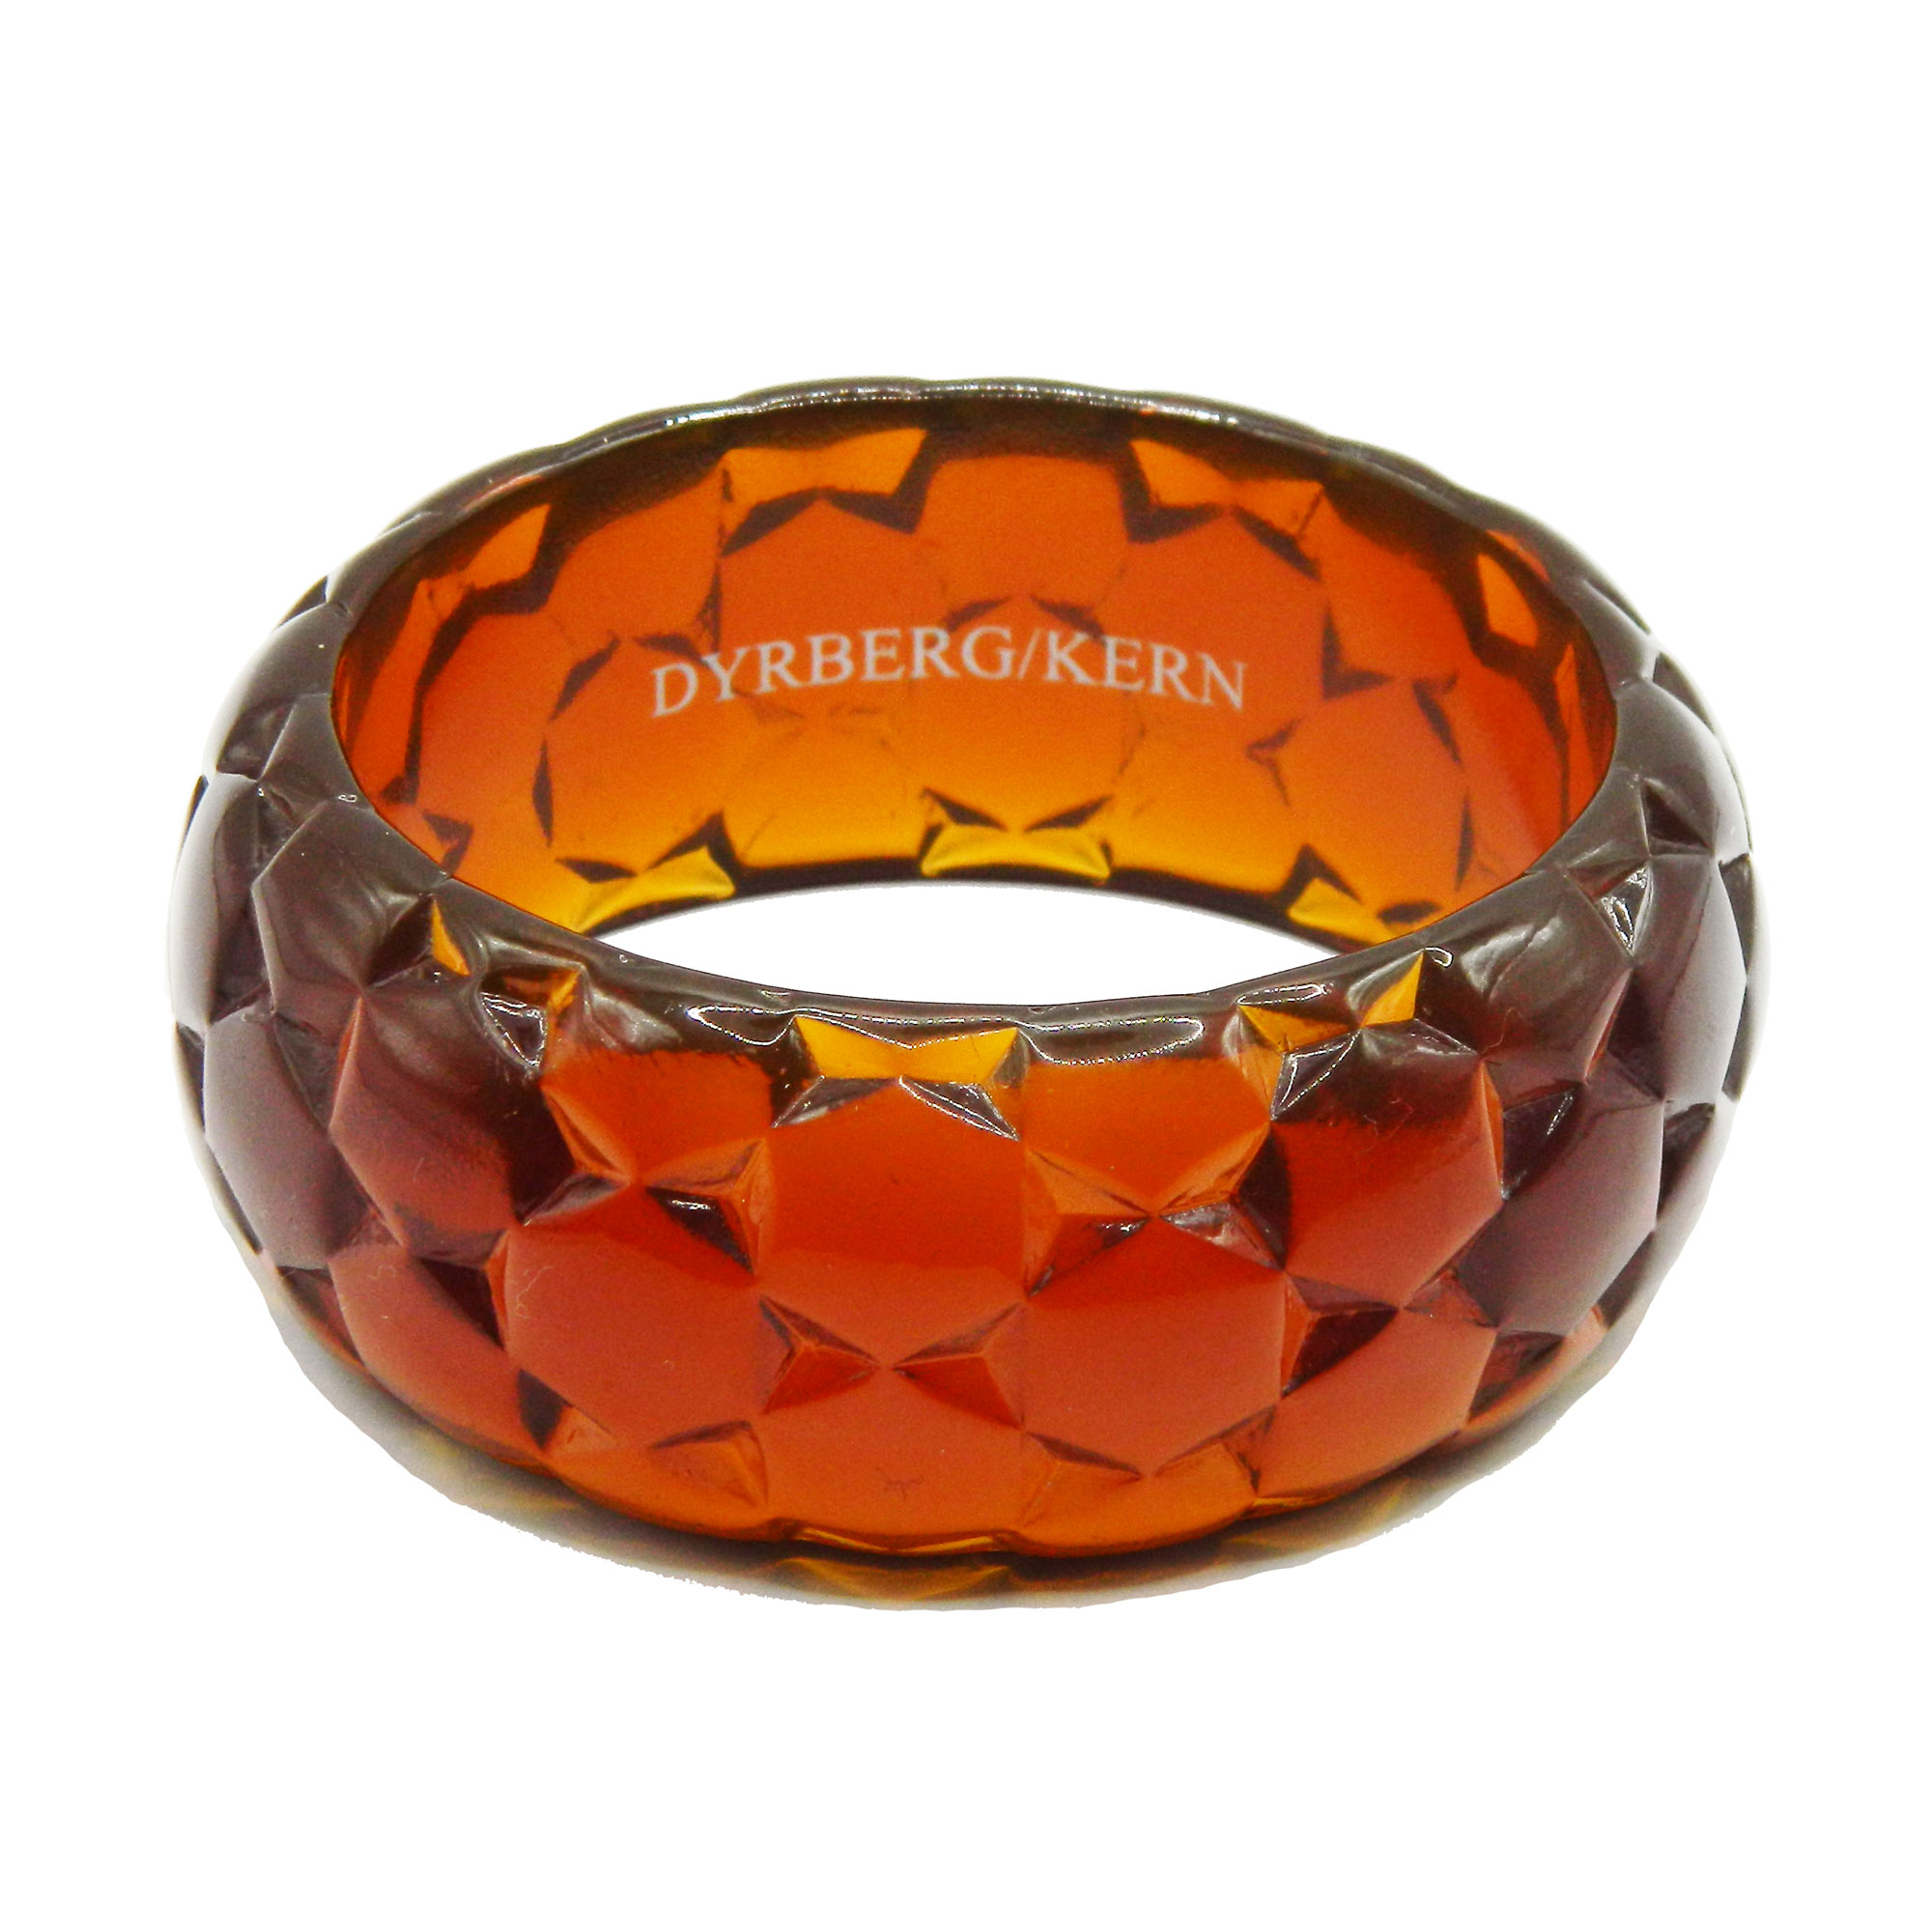 Dyrberg and Kern Resin bangle bracelet